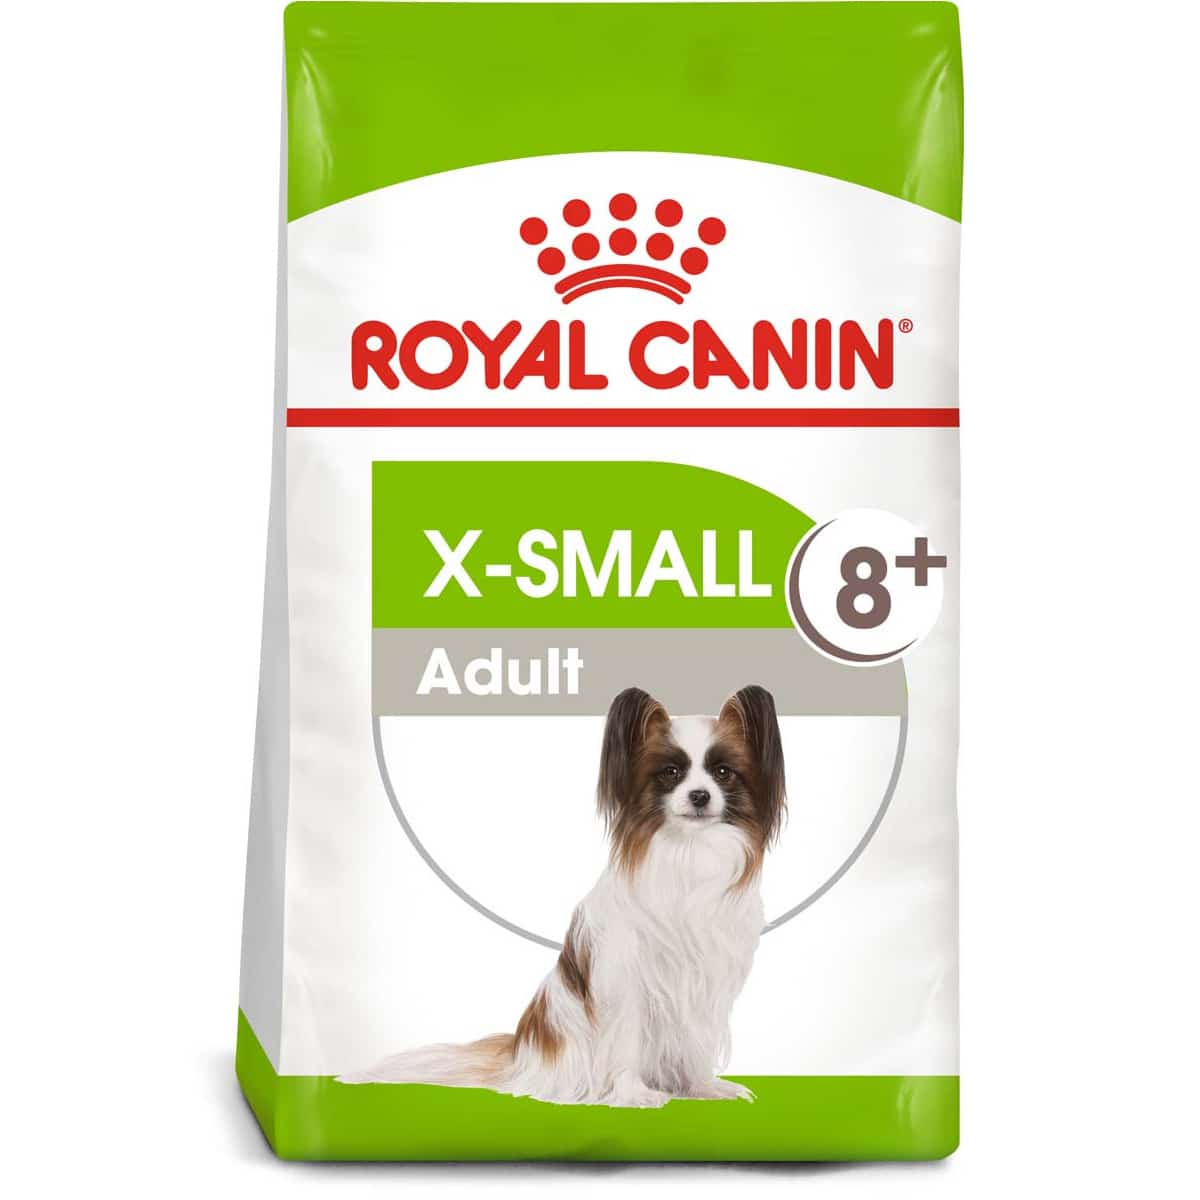 ROYAL CANIN X-SMALL Adult 8+ Trockenfutter für ältere sehr kleine Hunde 3kg